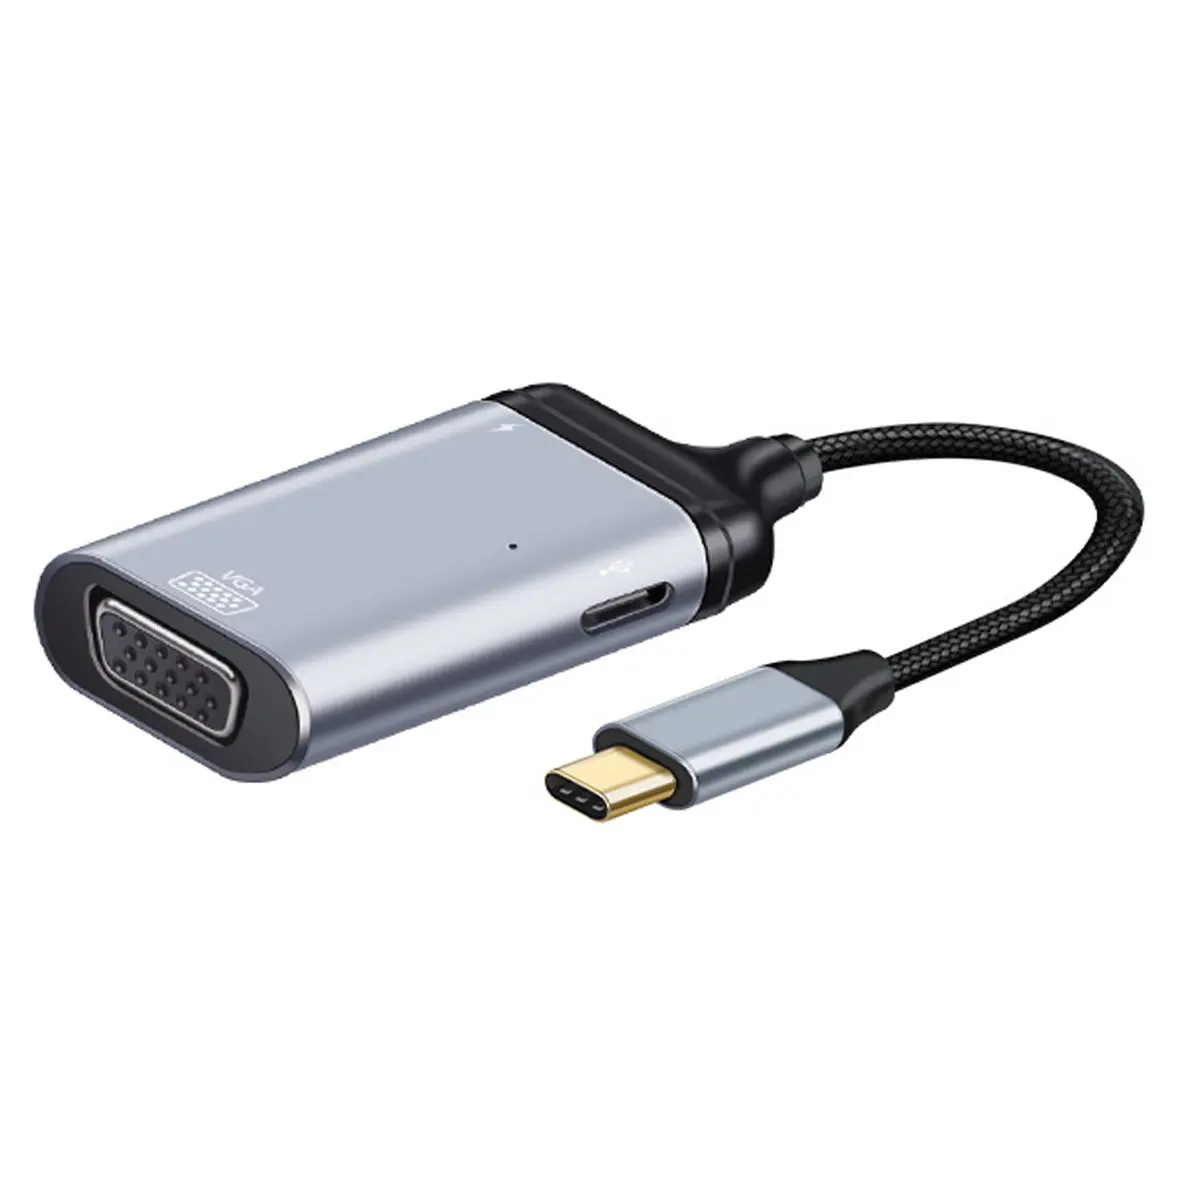 

qywo USB3.1 USB-C Type C to VGA RGB Converter HDTV Adapter 60hz 1080p with Female PD Power Port